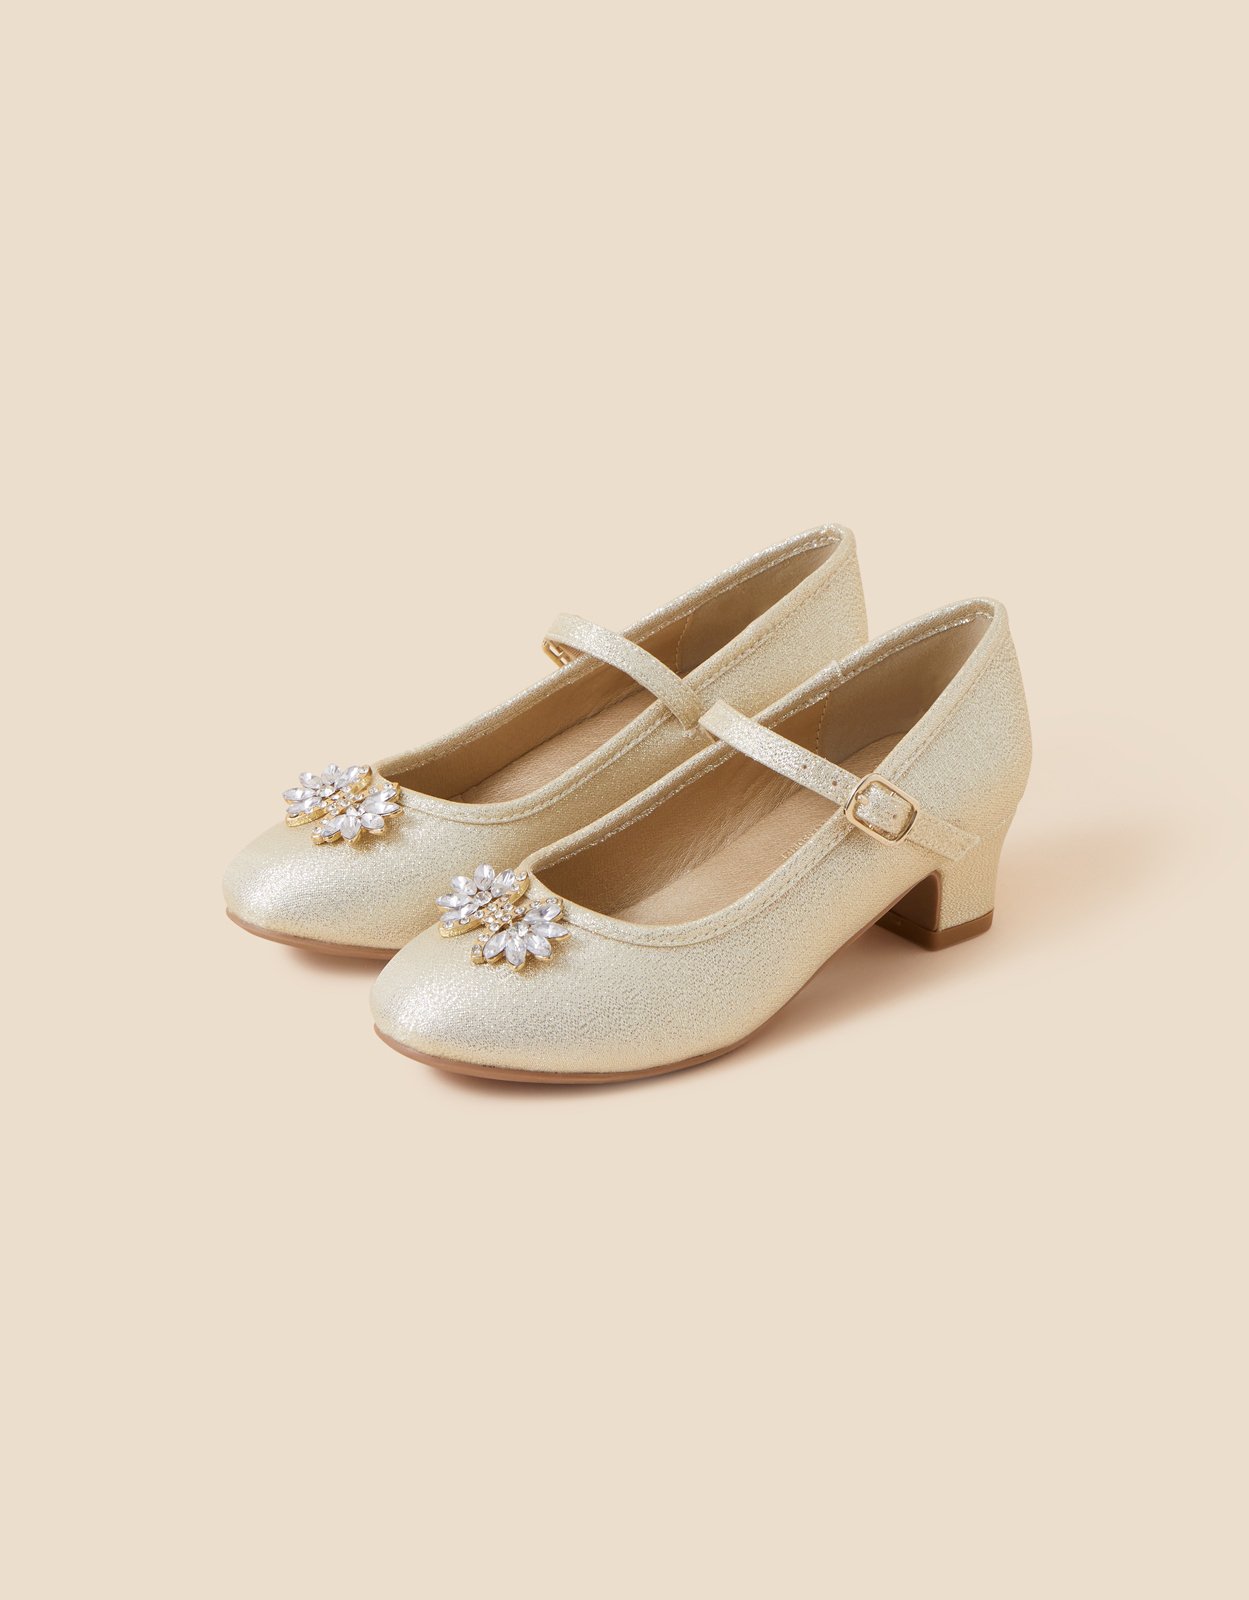 Accessorize Girl's Girls Shimmer Gem Flamenco Shoes Gold, Size: 13